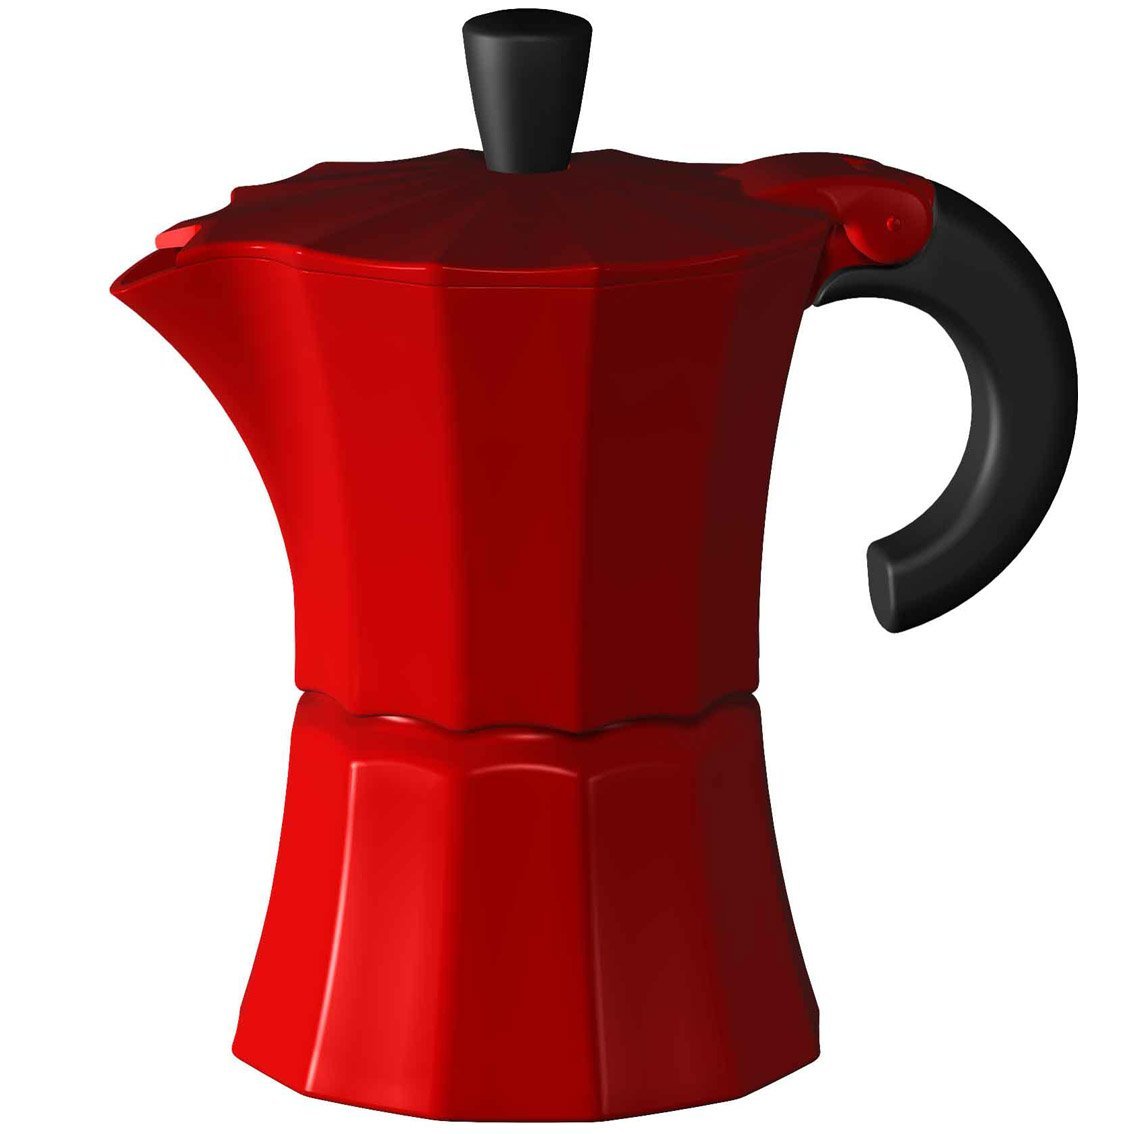 Gnali & Zani V210r-6 Morosina Express Stovetop Espresso Makers Red Measures - 6 Cup